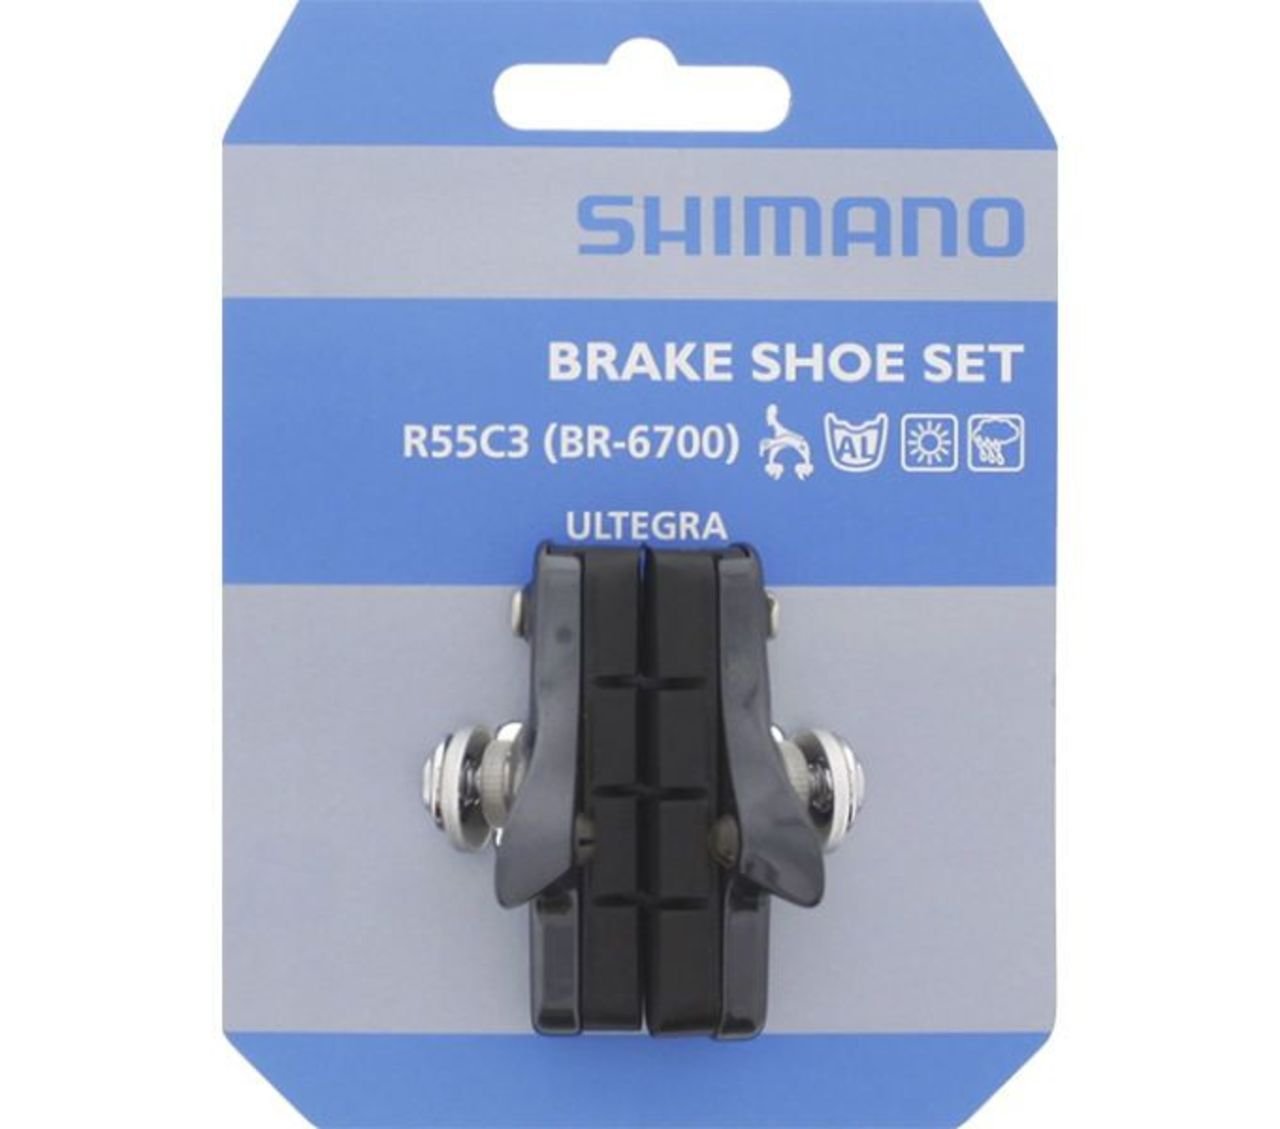 Тормозные колодки Shimano, brake pad, R55C3, Cartridge, for BR-6700, for aluminium rim, 1 pair, A154773 тормозные колодки для велосипеда shimano для дискового тормоза m07ti пара пластик y8e598020